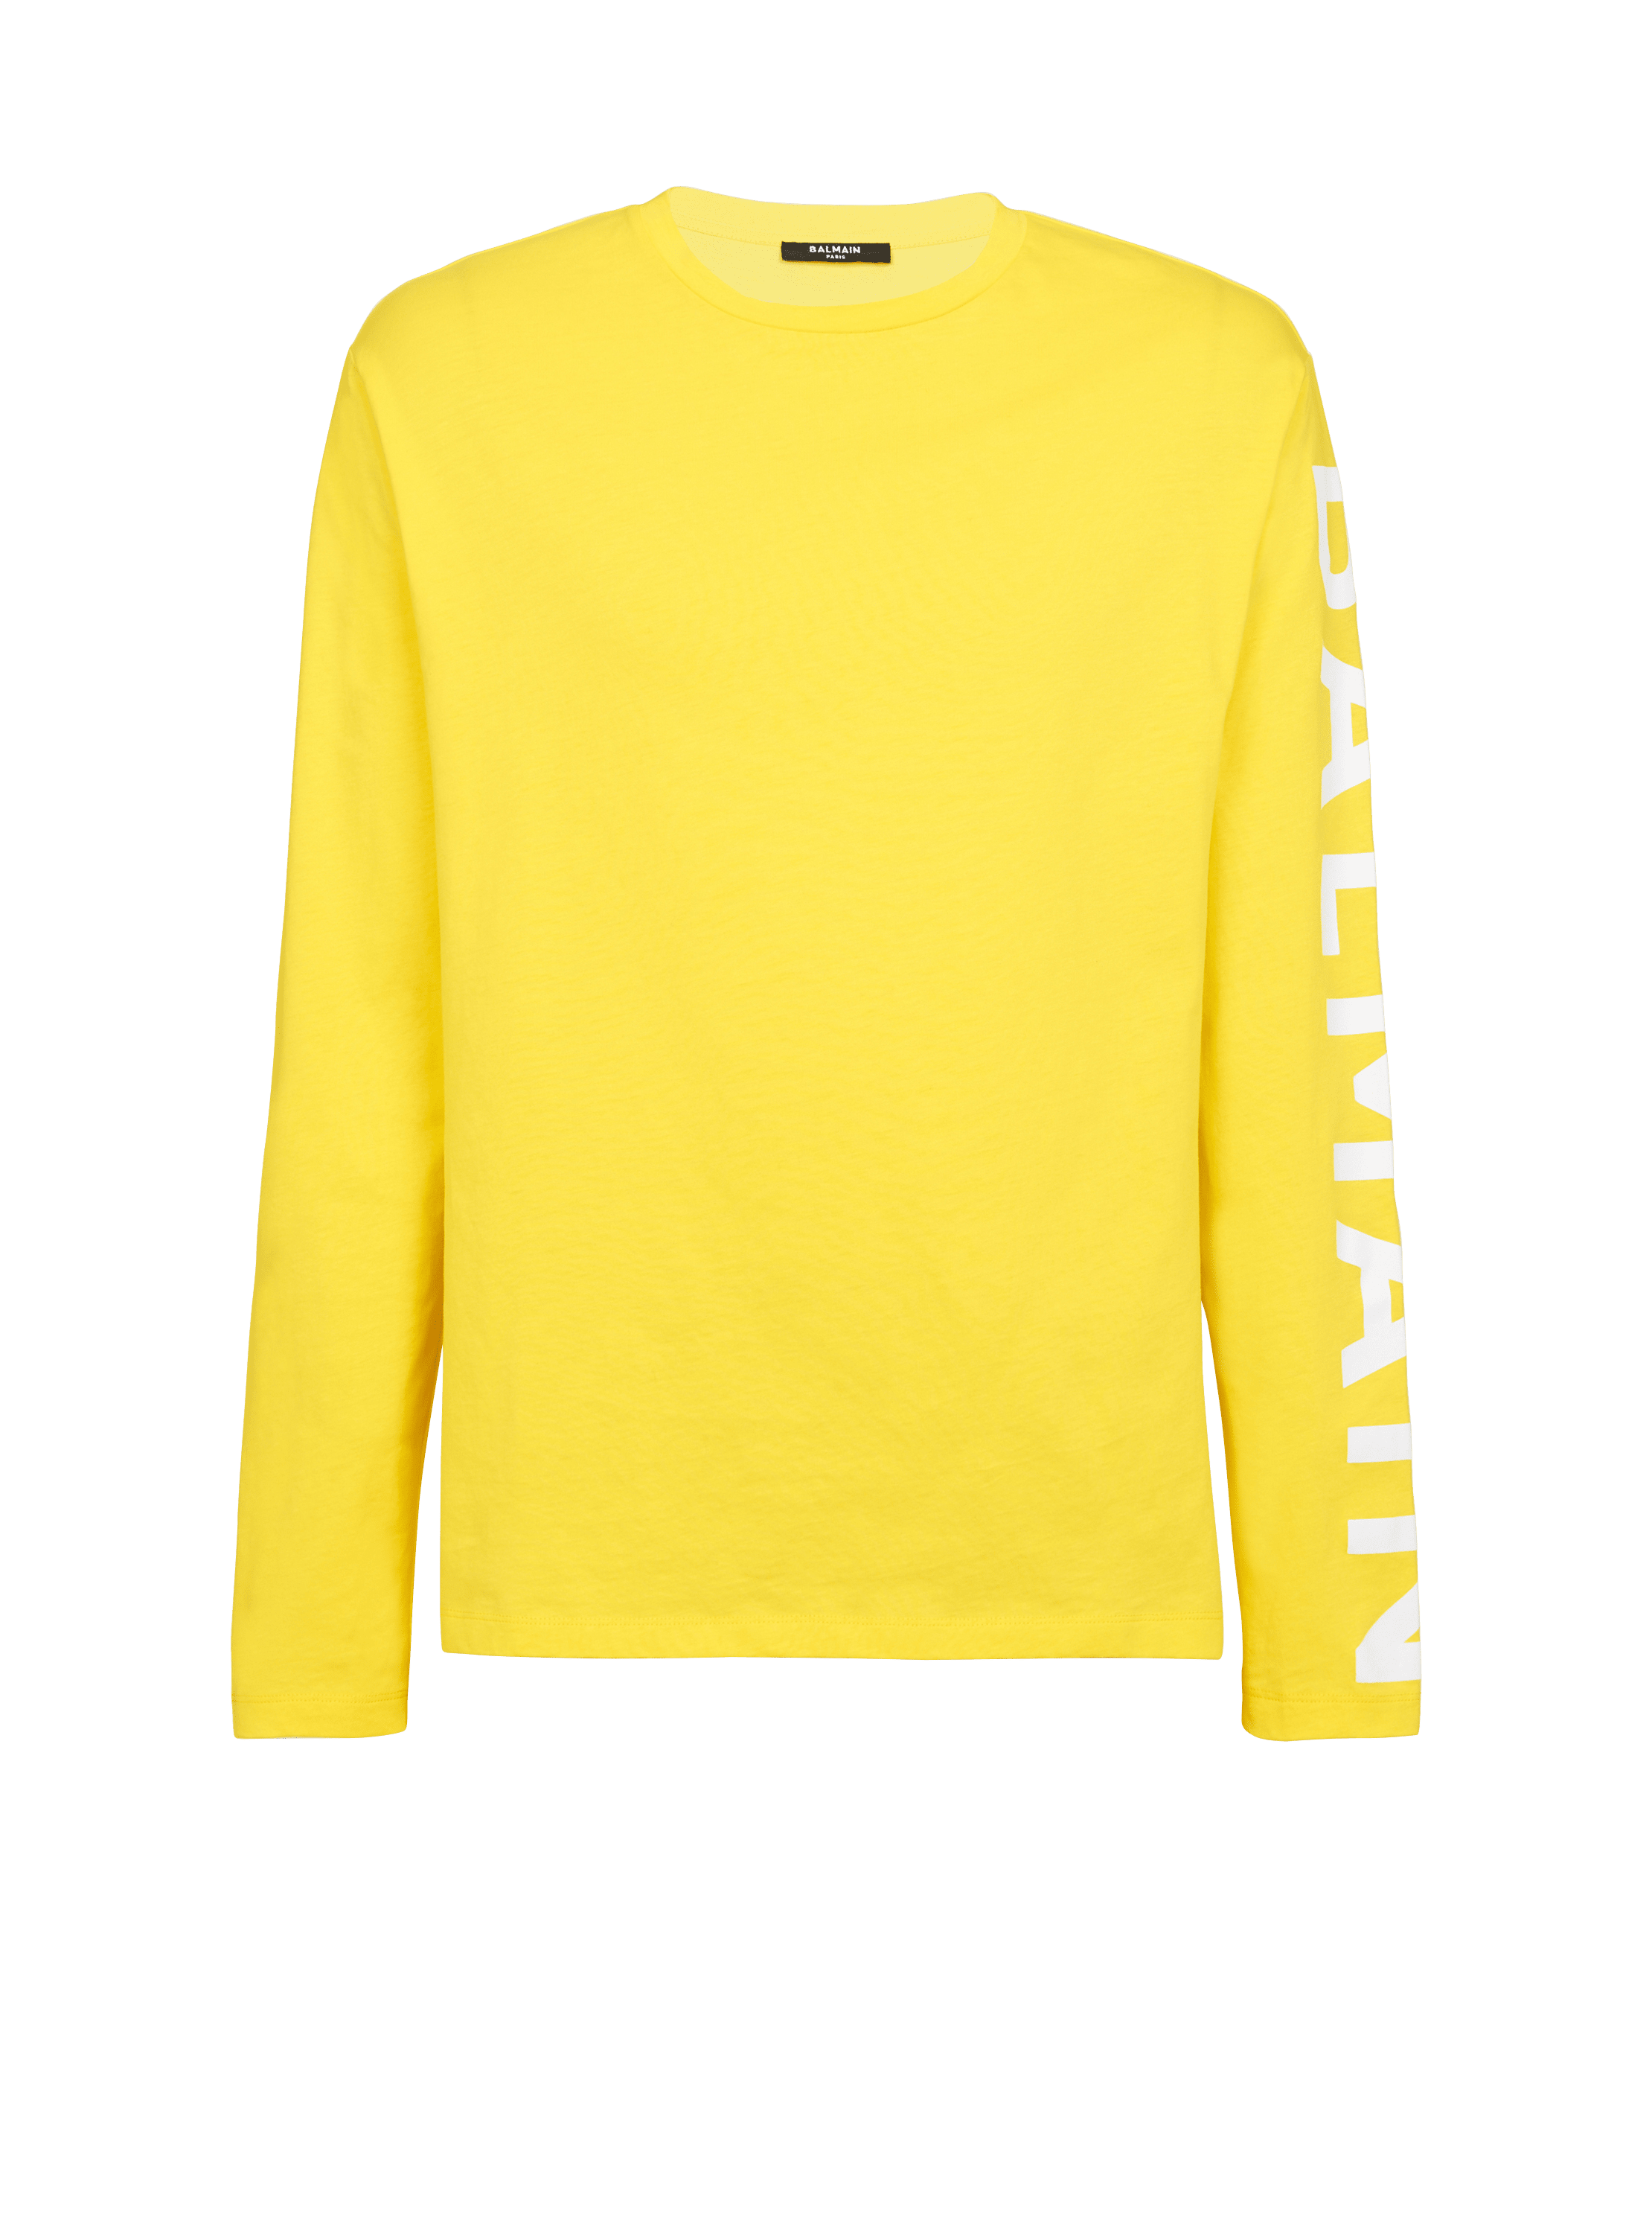 T-shirt en coton à logo Balmain, jaune, hi-res